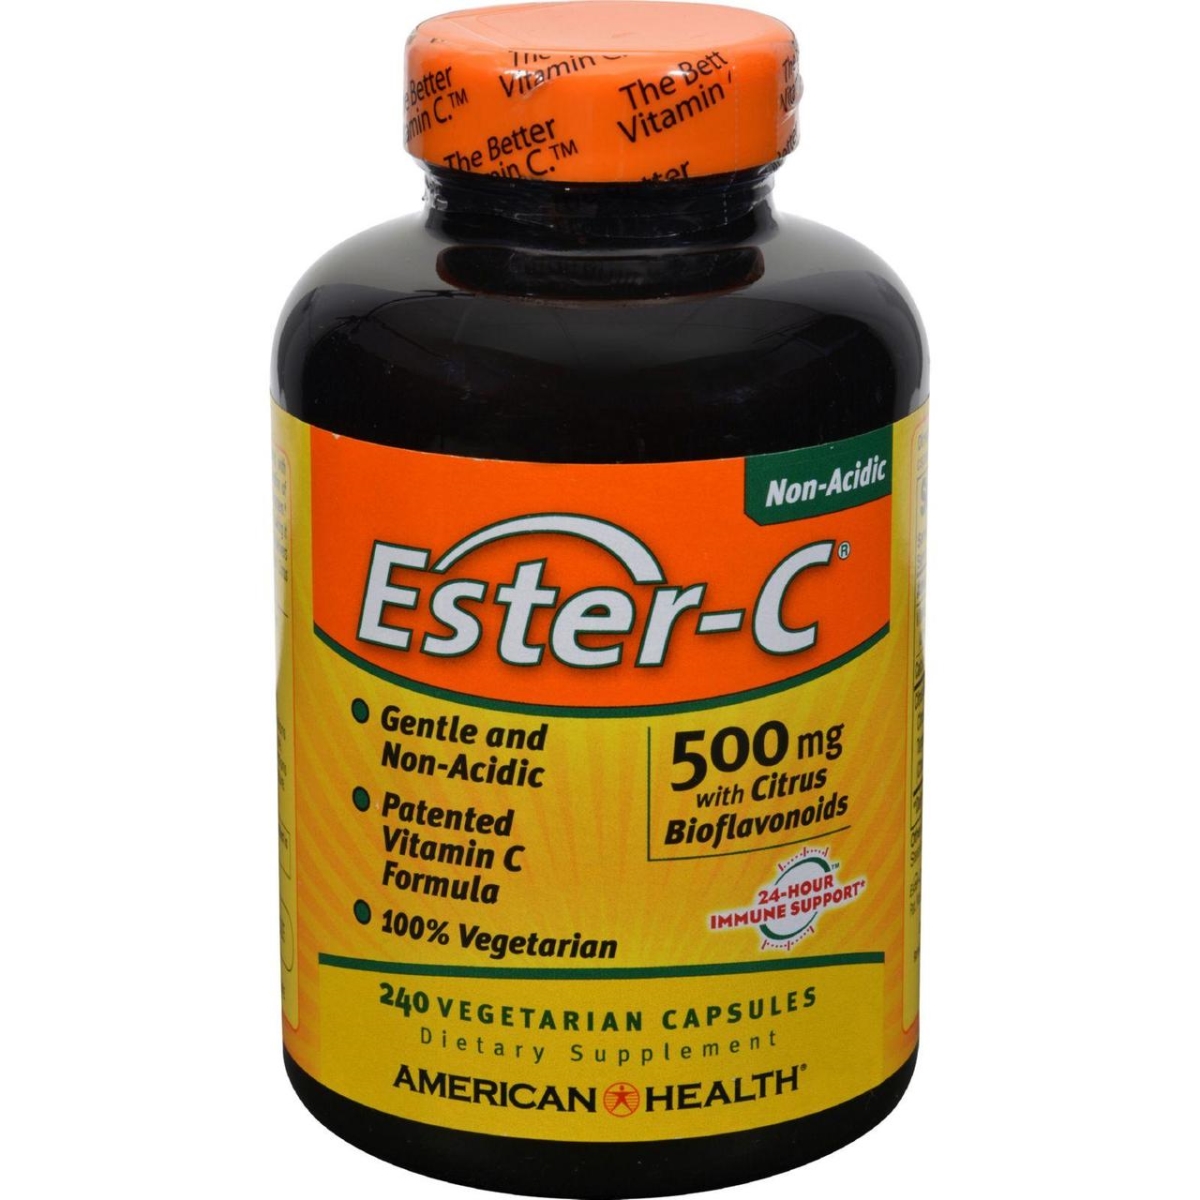 American Health Hg0888131 500 Mg Ester-c With Citrus Bioflavonoids, 240 Vegetarian Capsules